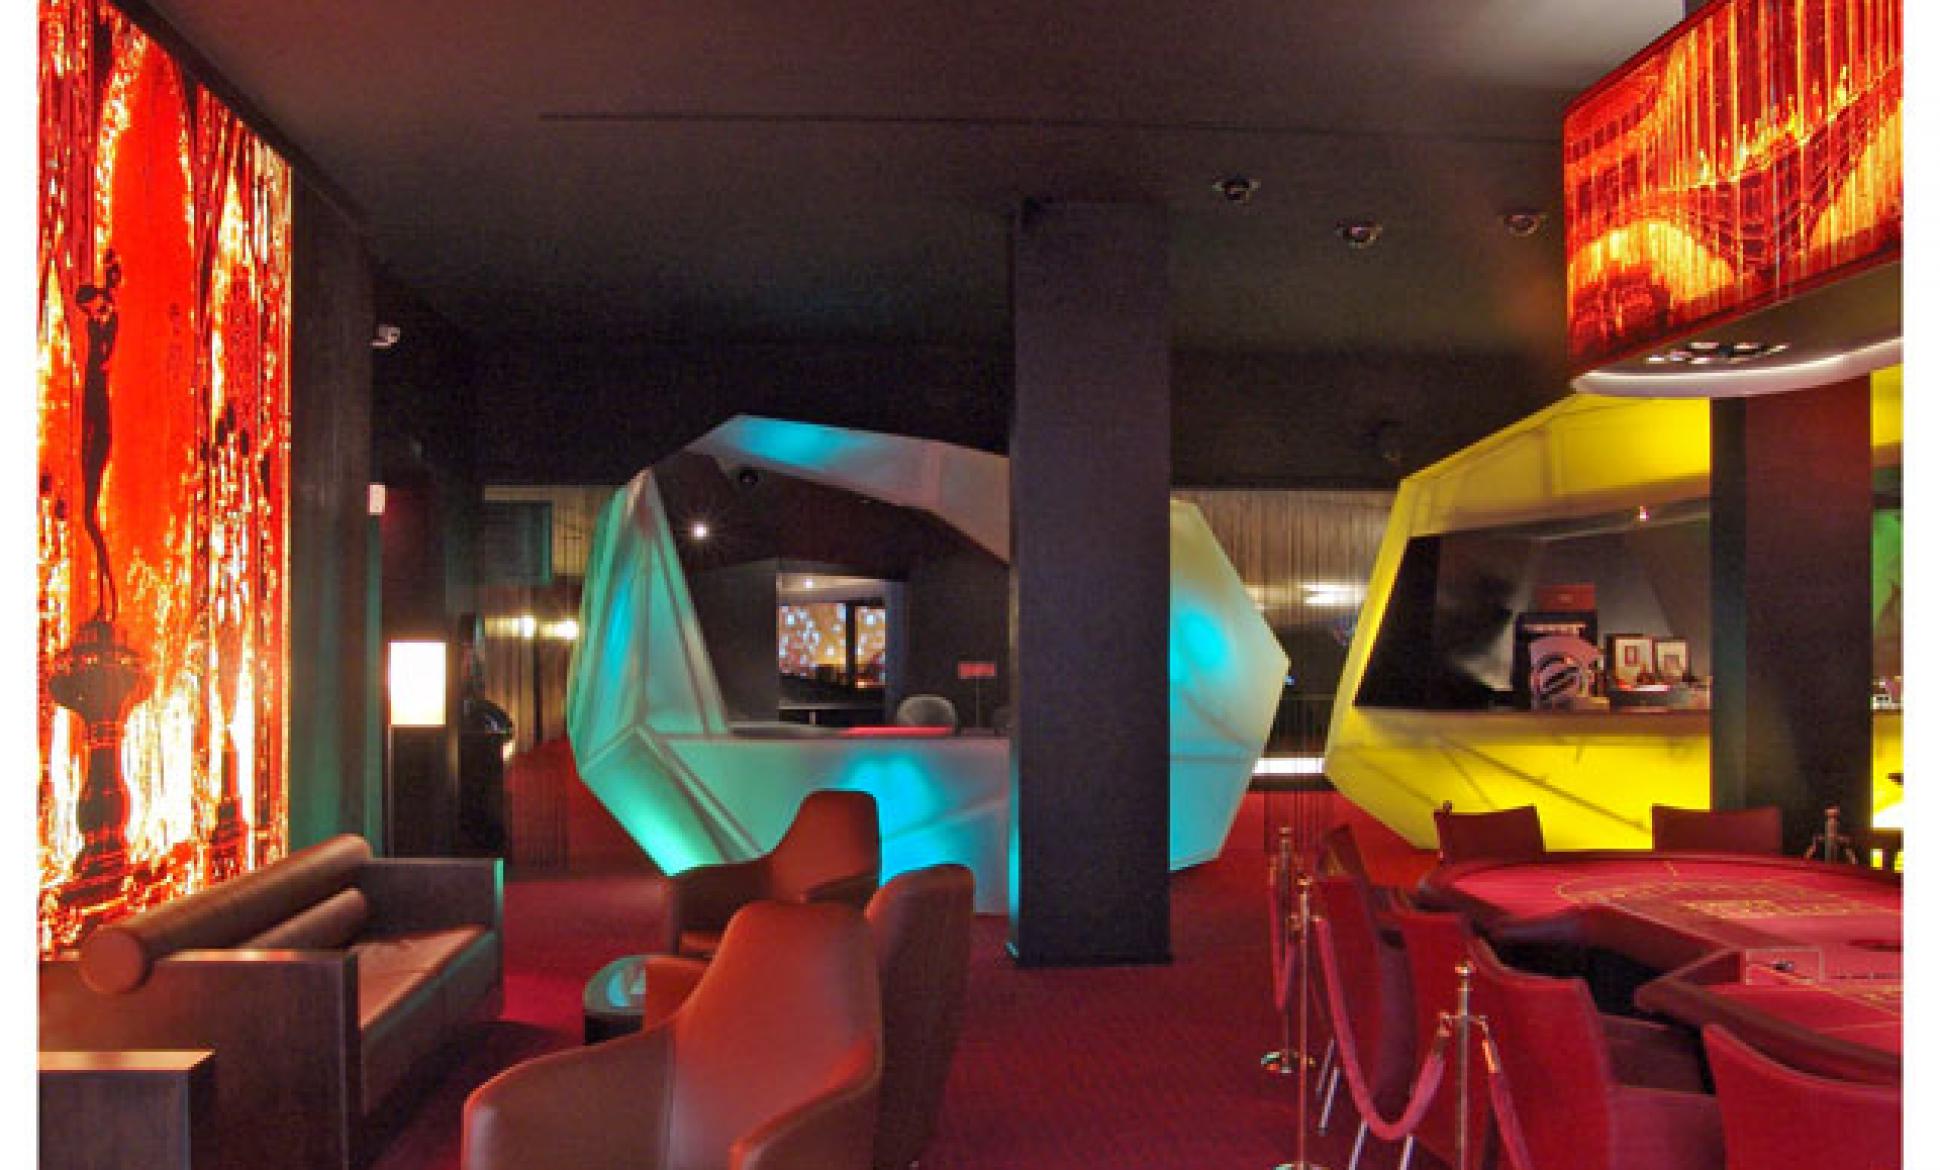 Grand Casino lounge bar